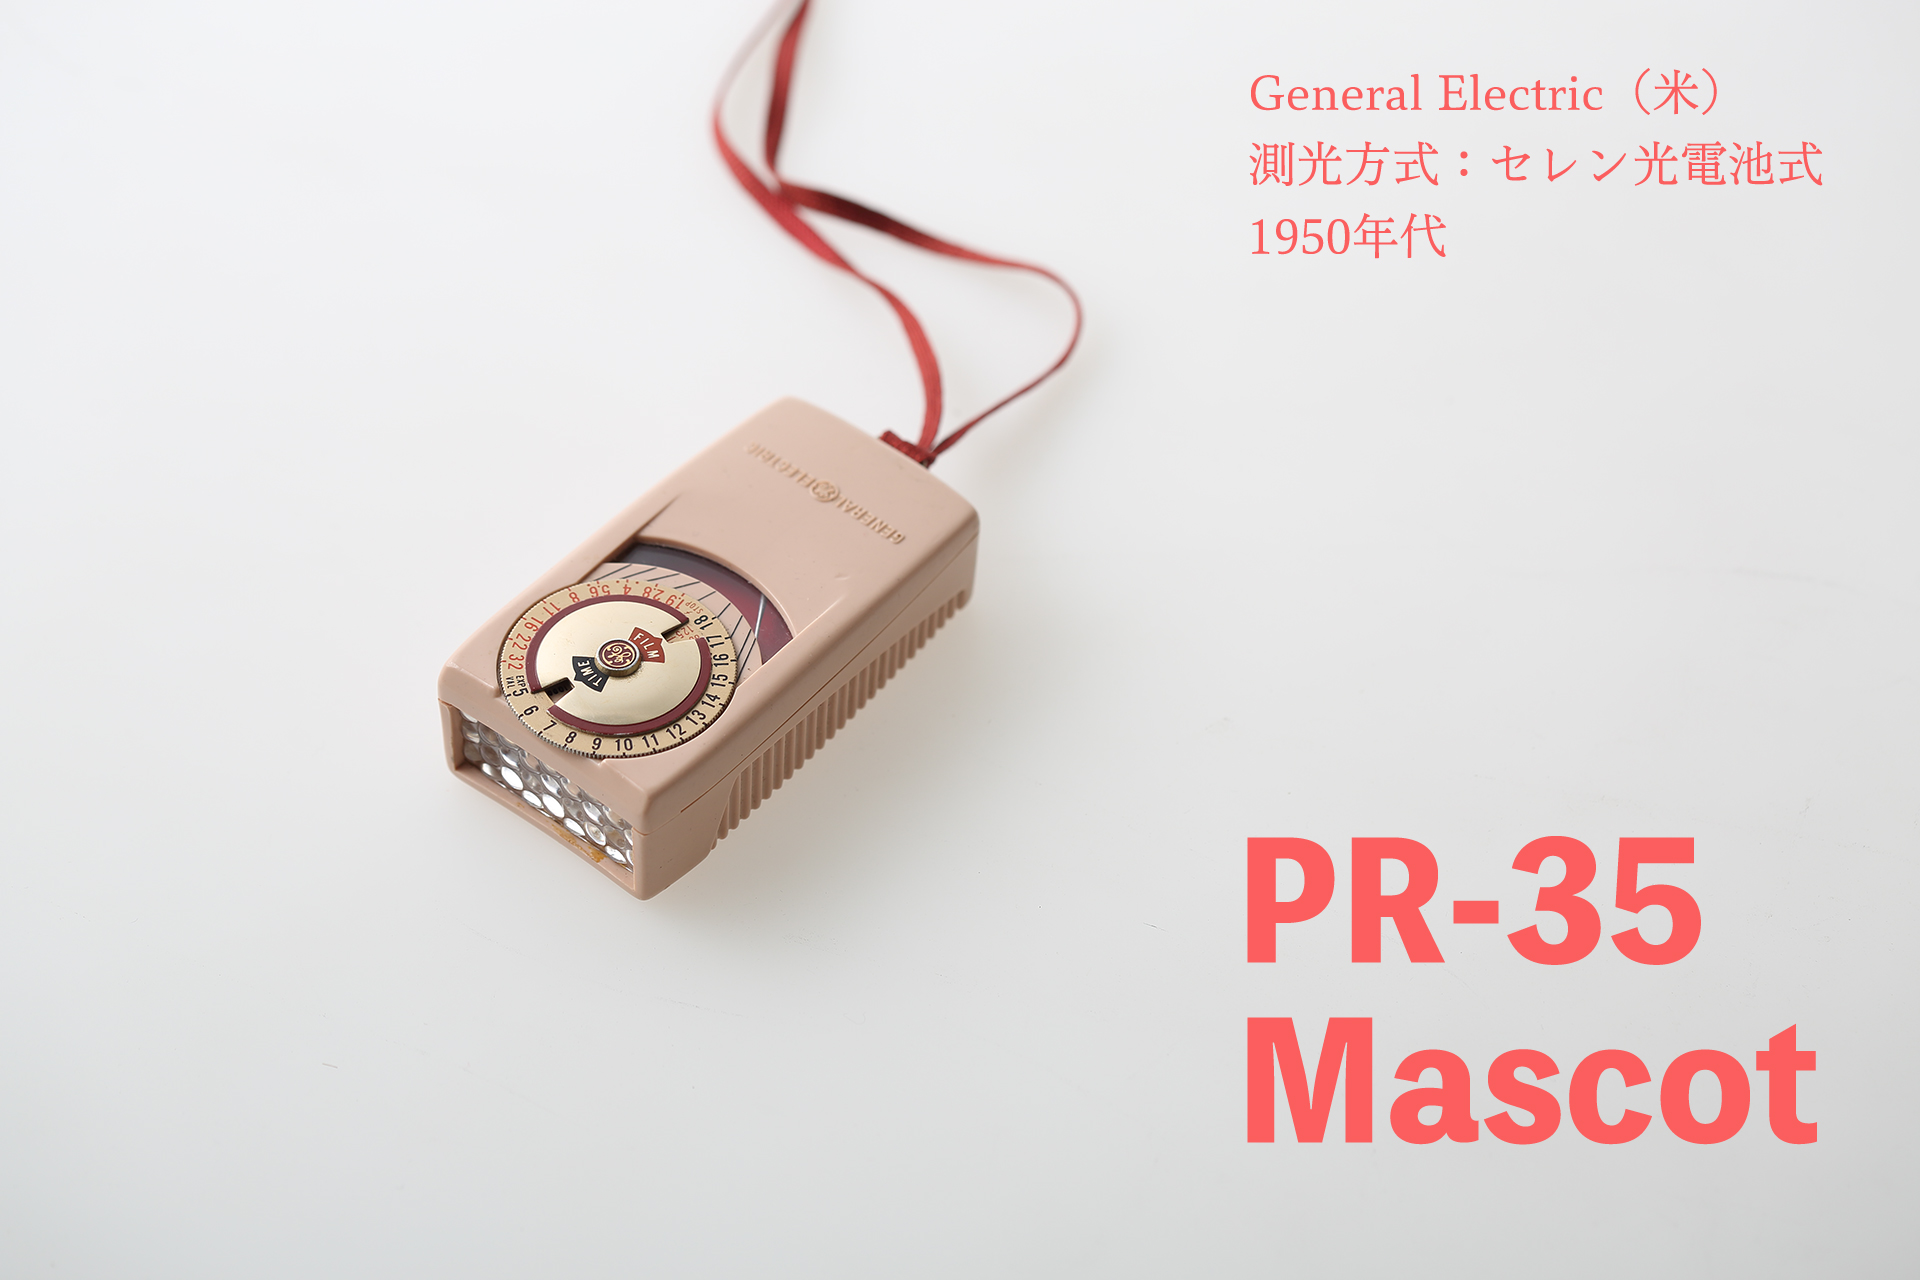 PR-35 Mascot / General Electric（米）